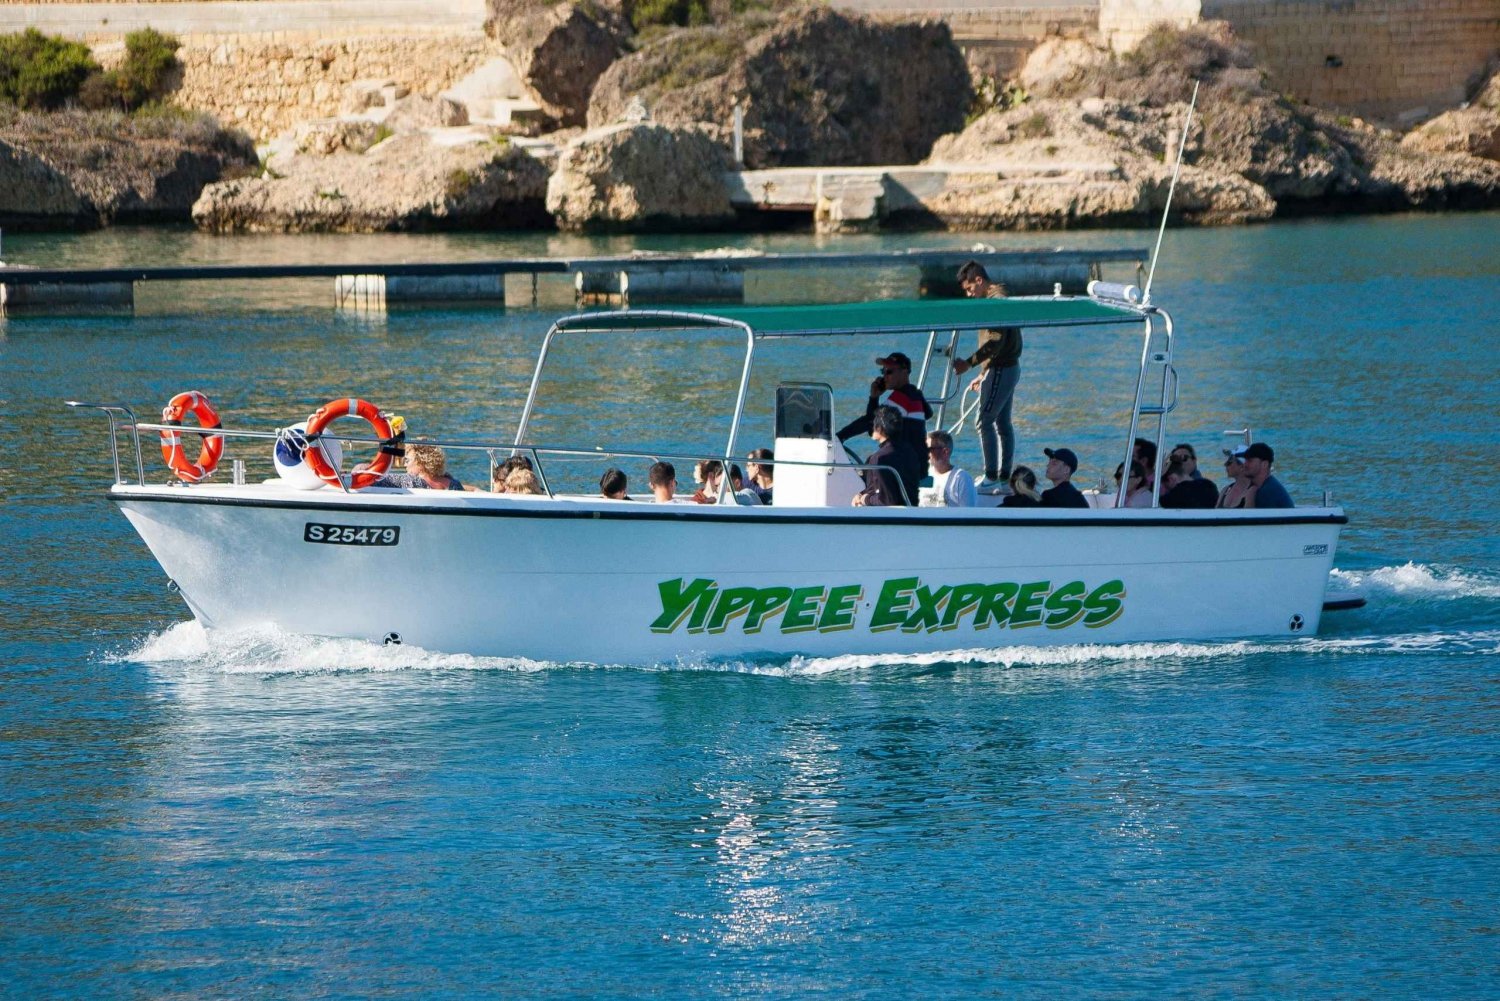 Private Boat Charter - Comino/Parts of Gozo